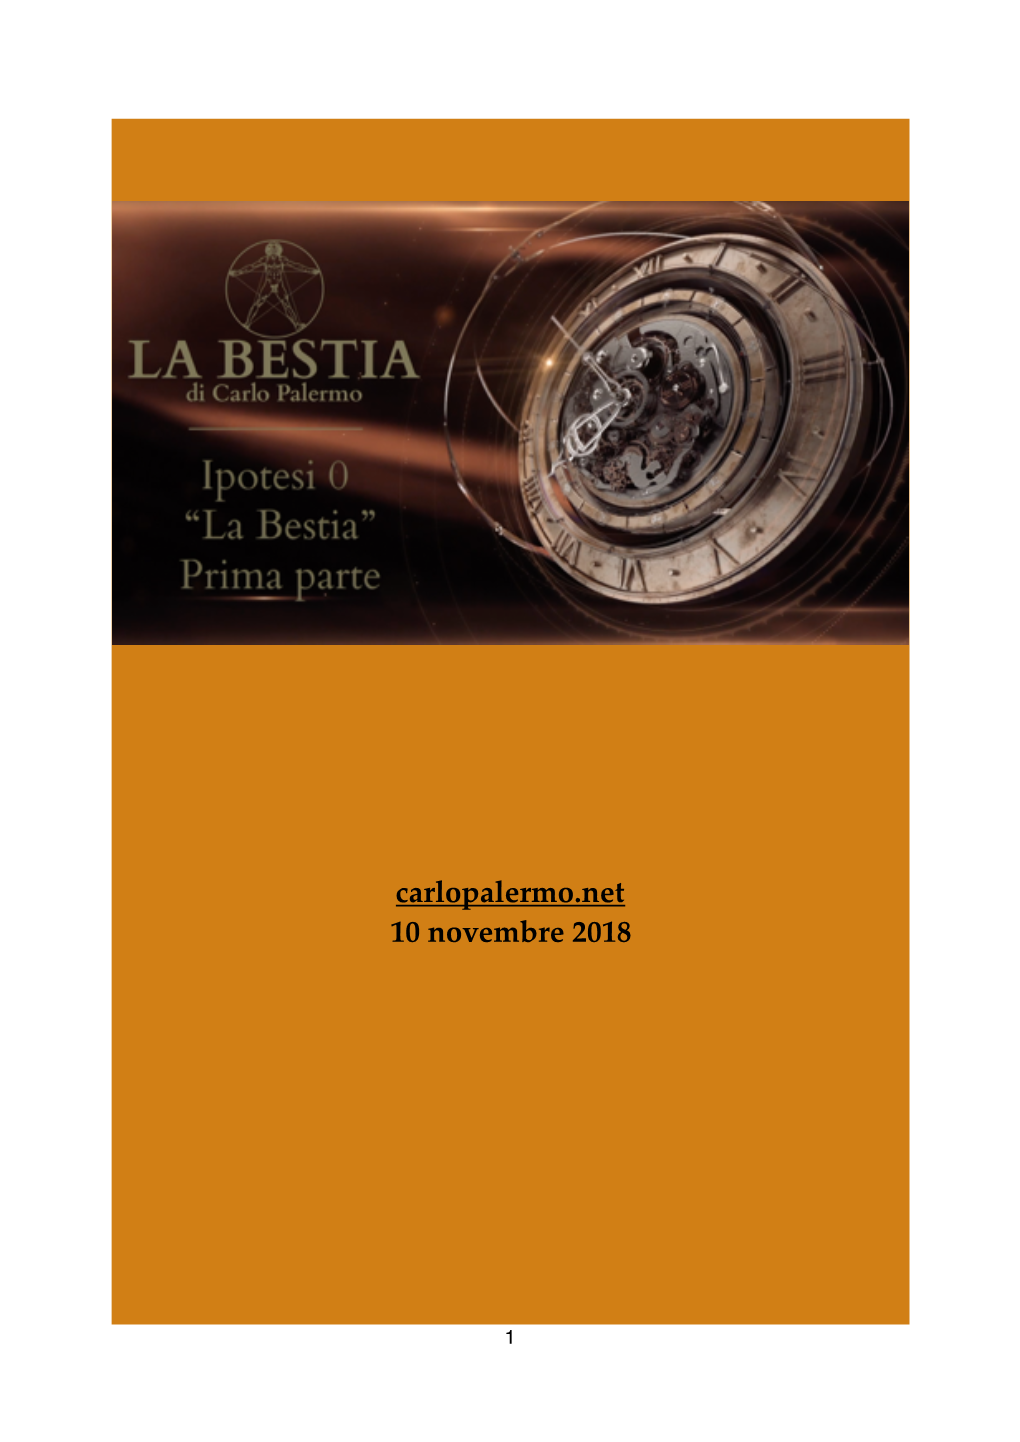 I Video. La Bestia. Ipotesi.0, 3.10.2018